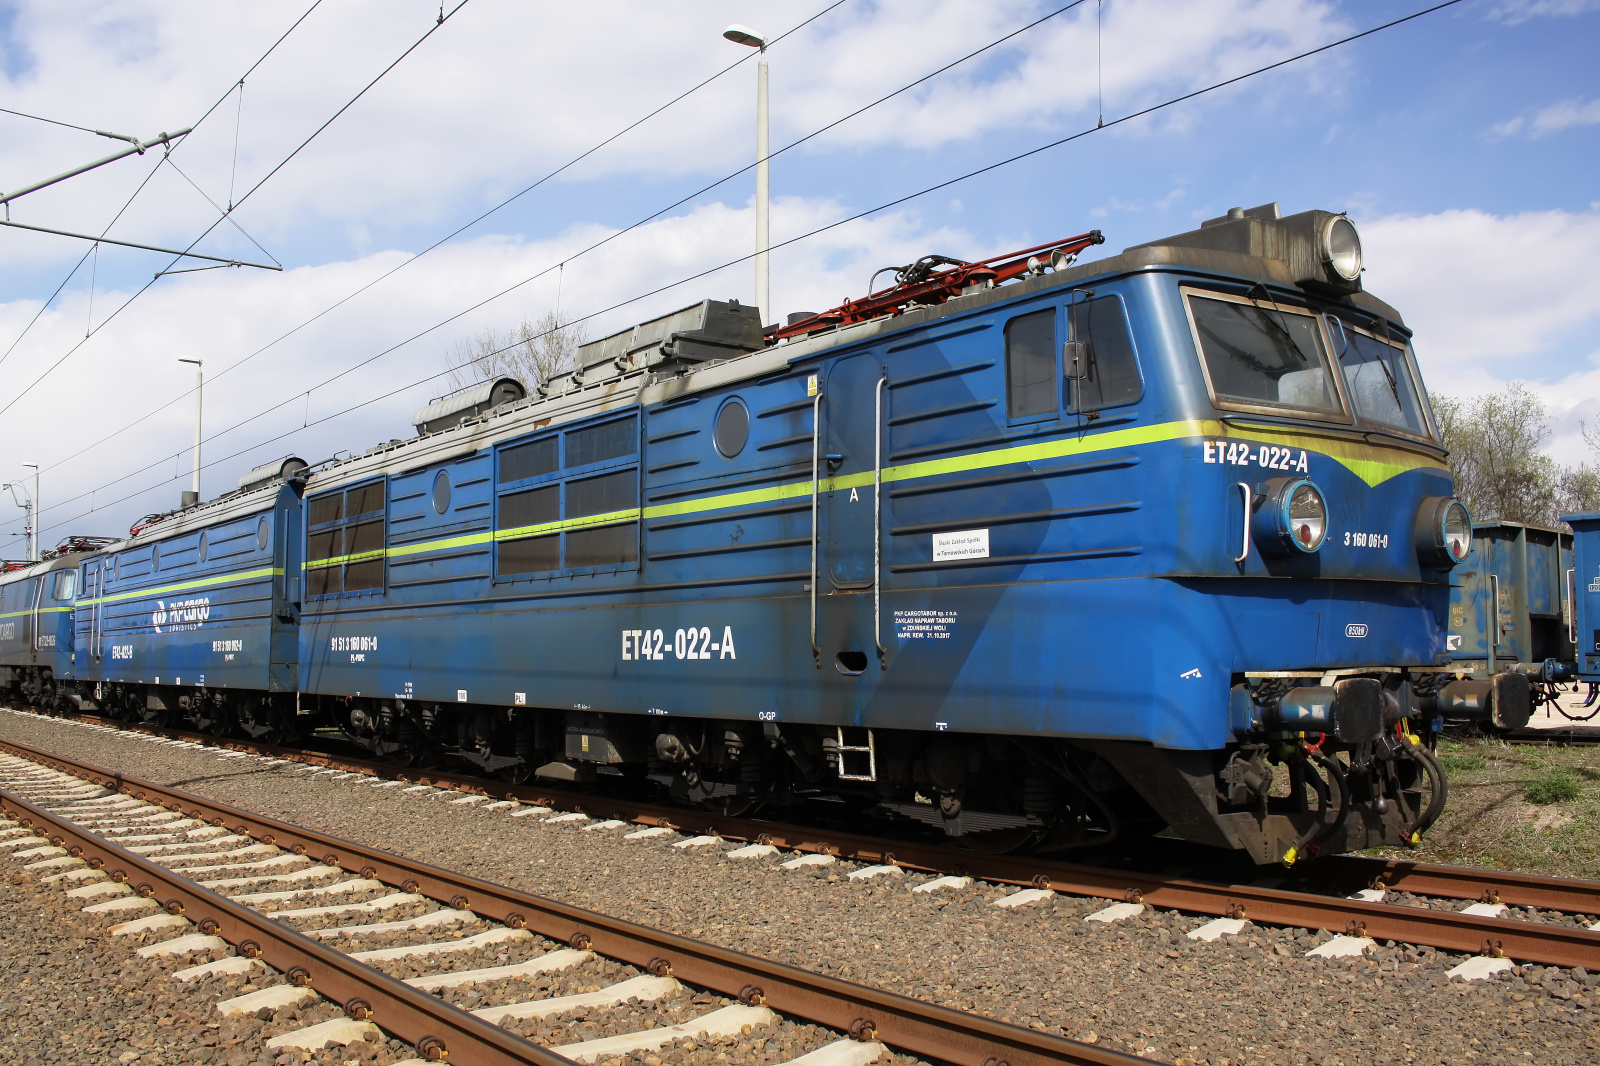 НЭВЗ 112E ET42-022 (Vehicles » Trains and Locomotives)